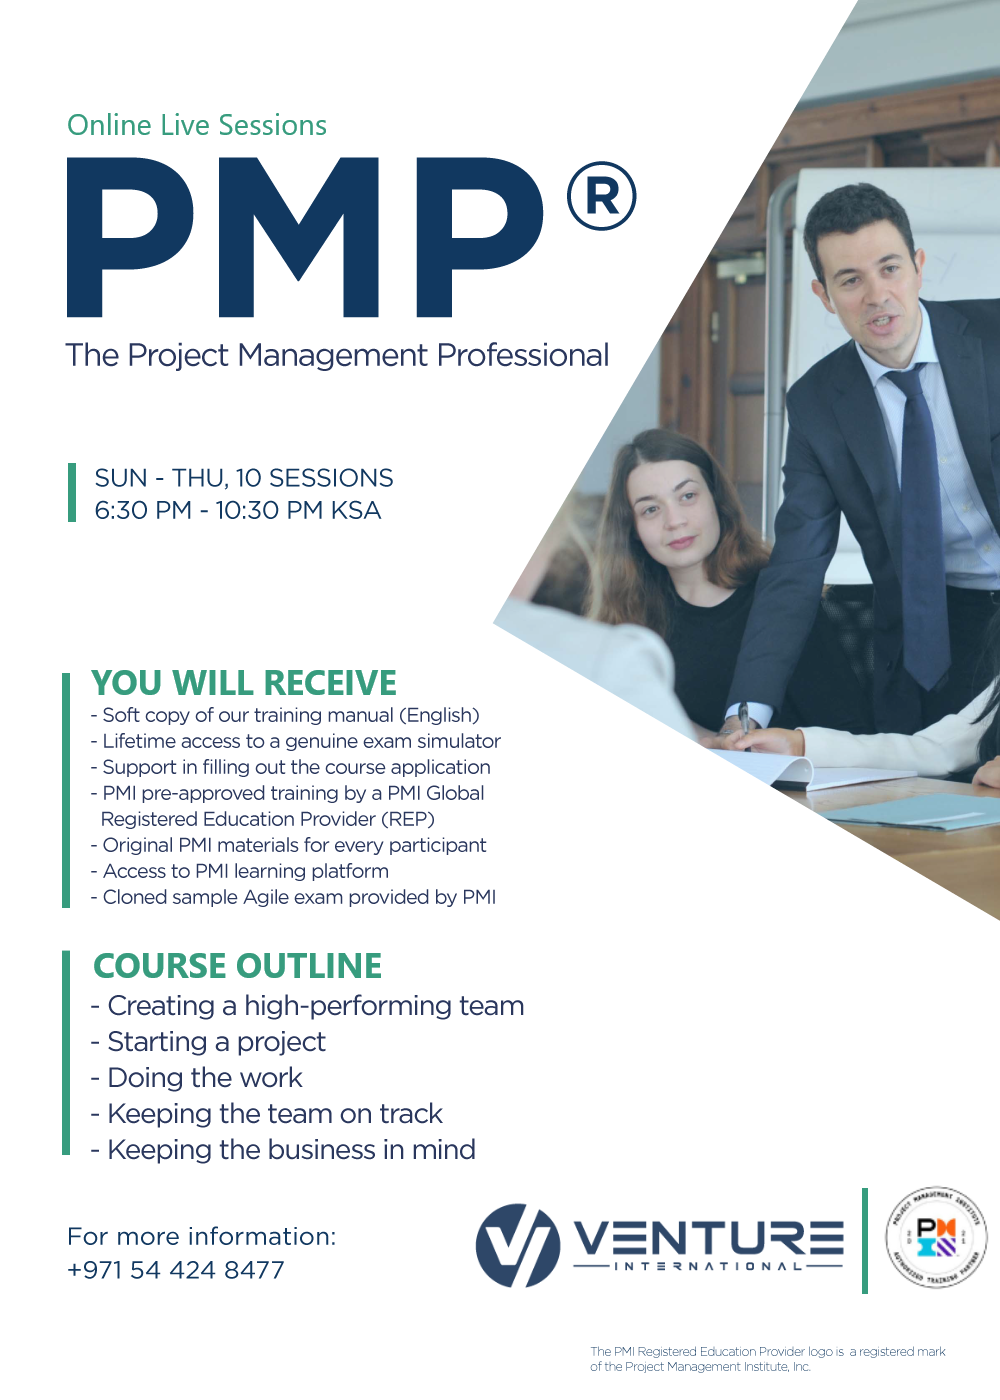 Venture International PMP Course Outline